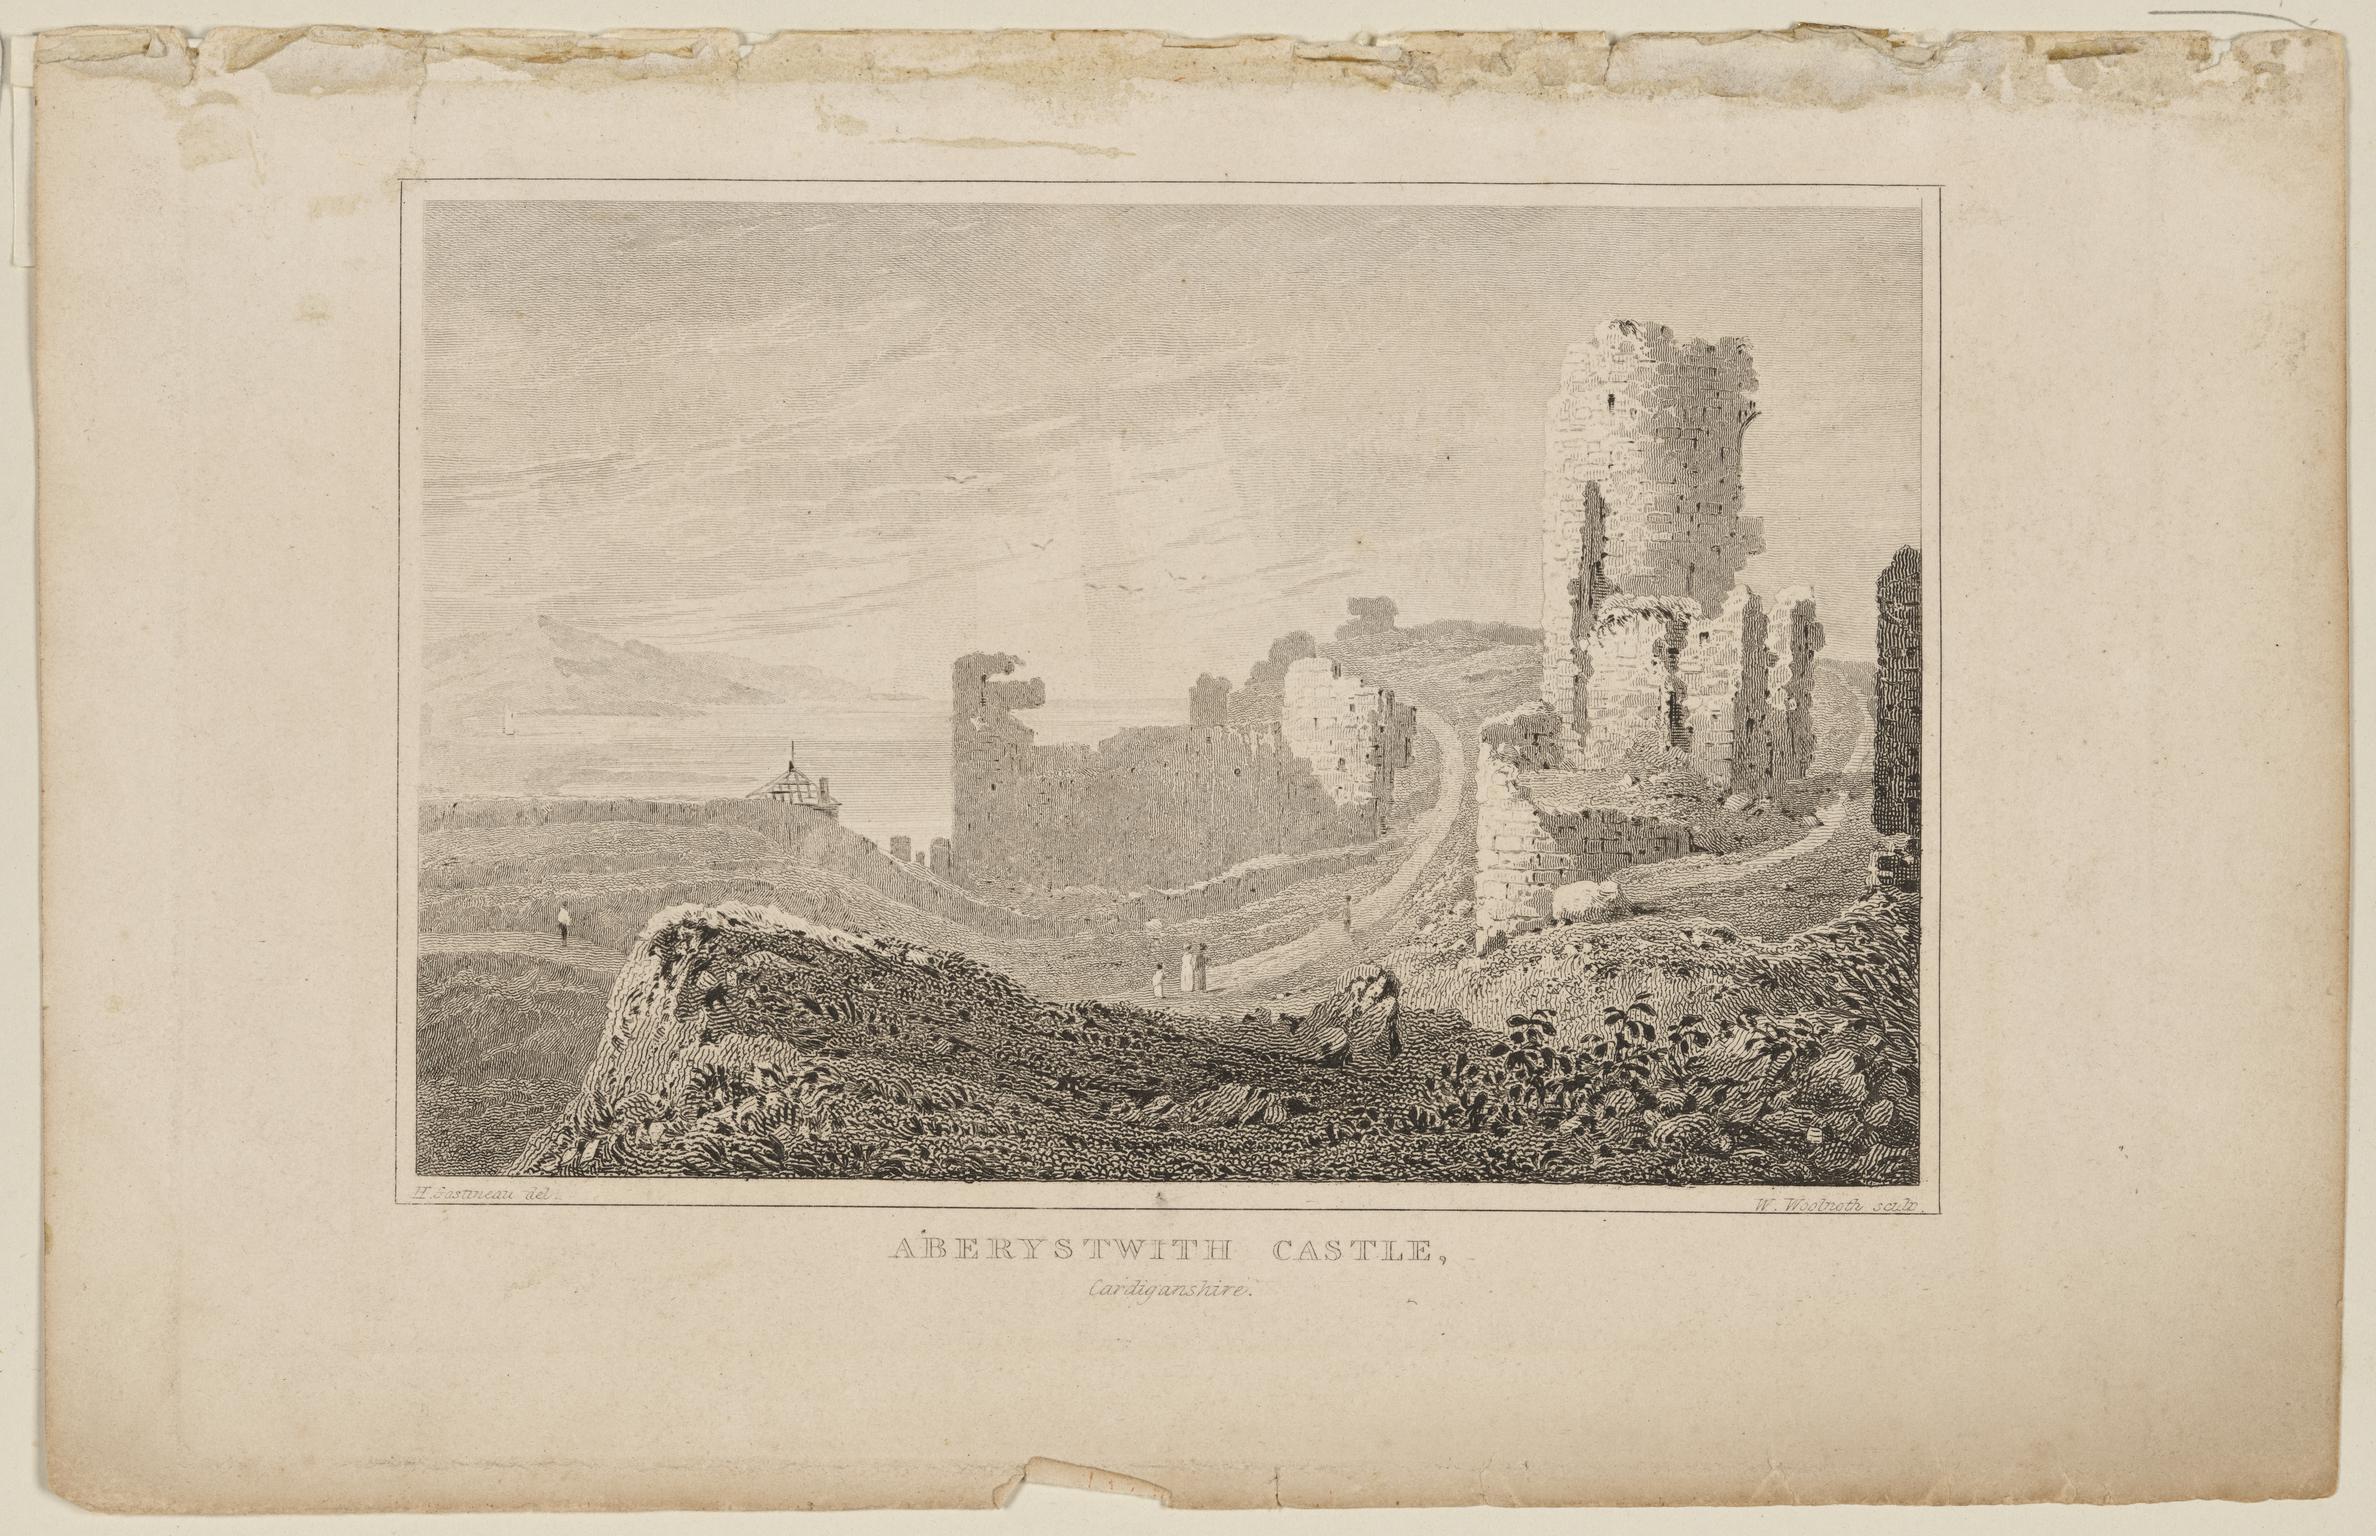 Aberystwith Castle